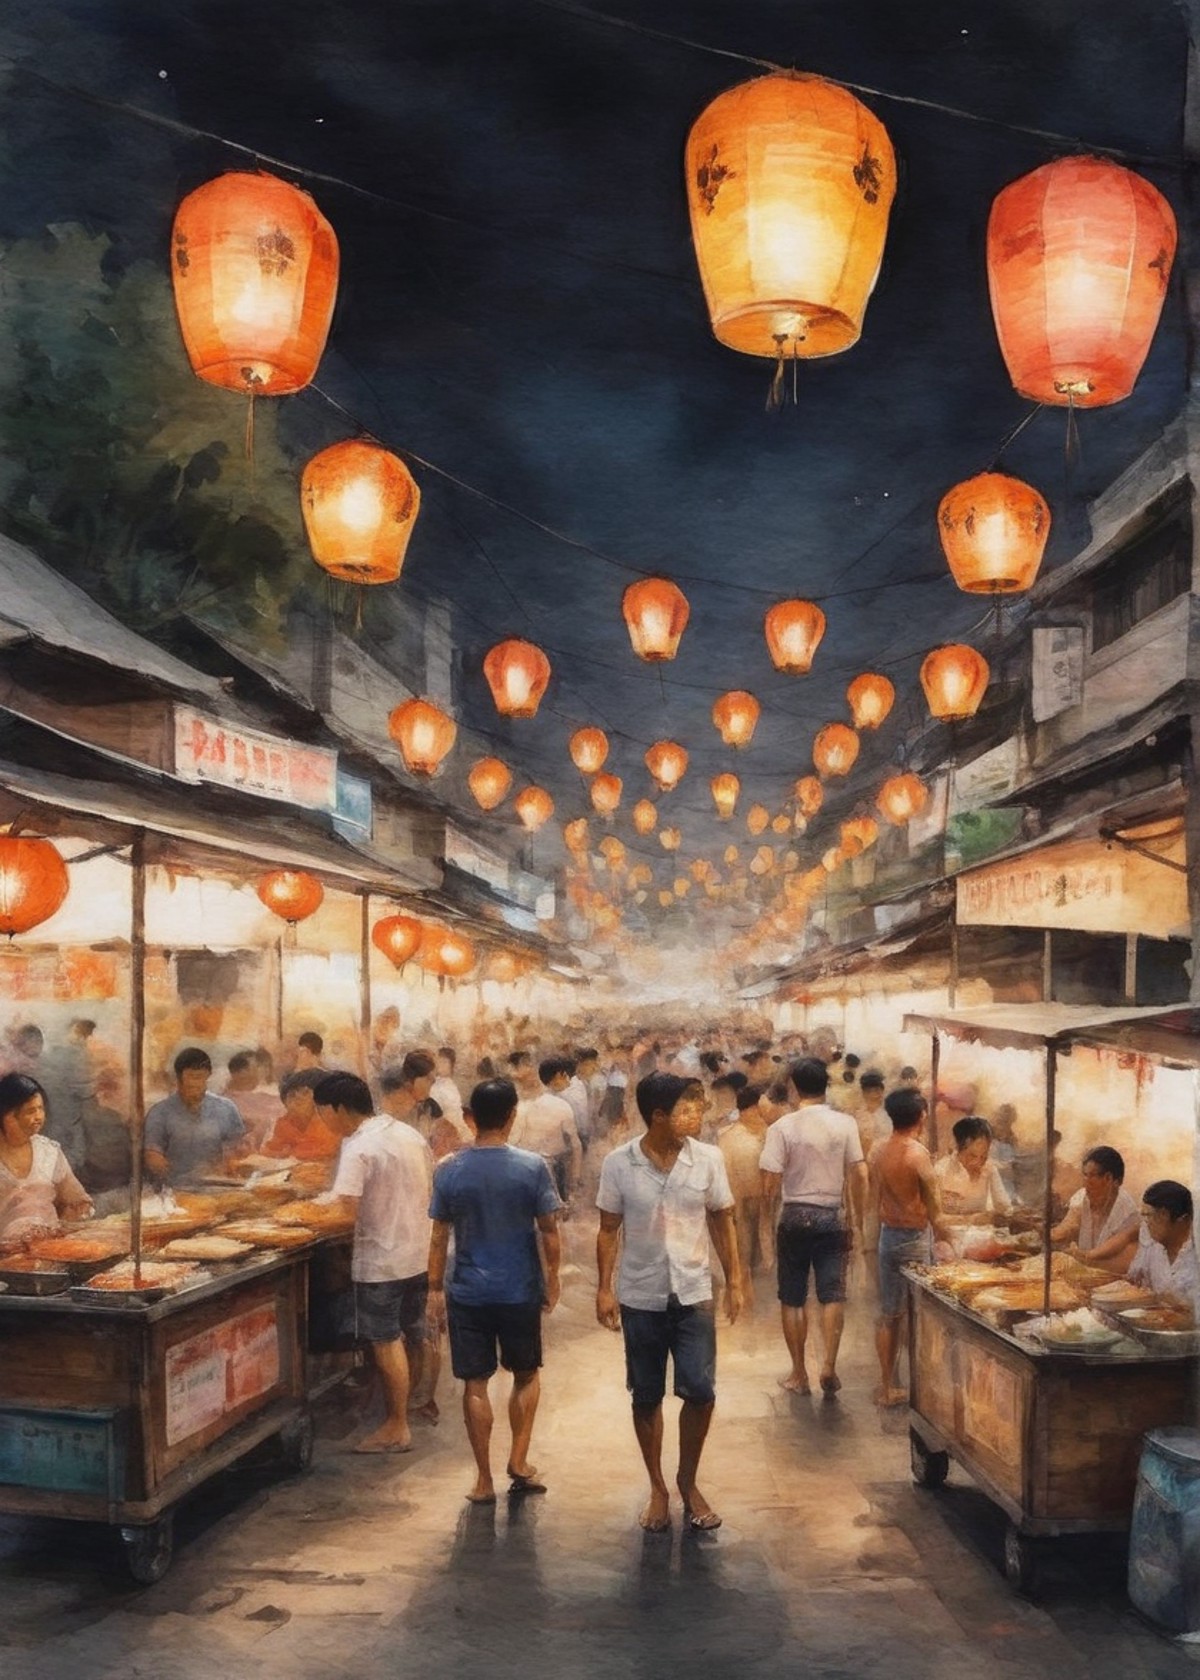 A bustling night market in Bangkok with lanterns illuminating the array of street food vendors